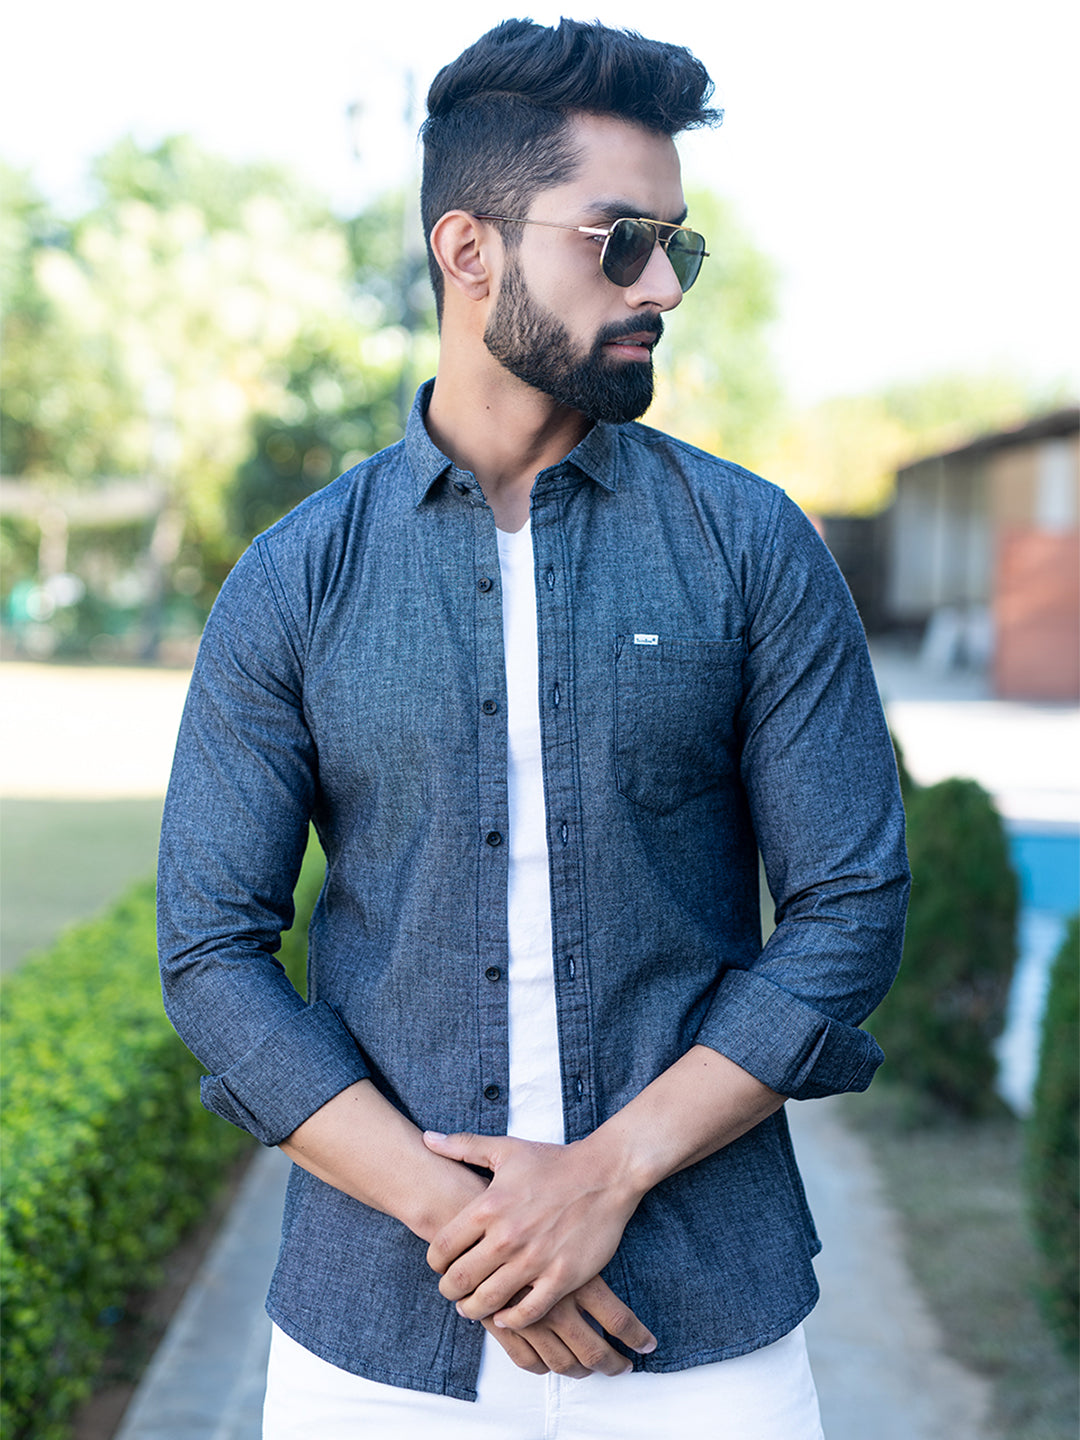 Buy Light Blue Single Pocket Denim Shirt for Men Online in India -Beyoung